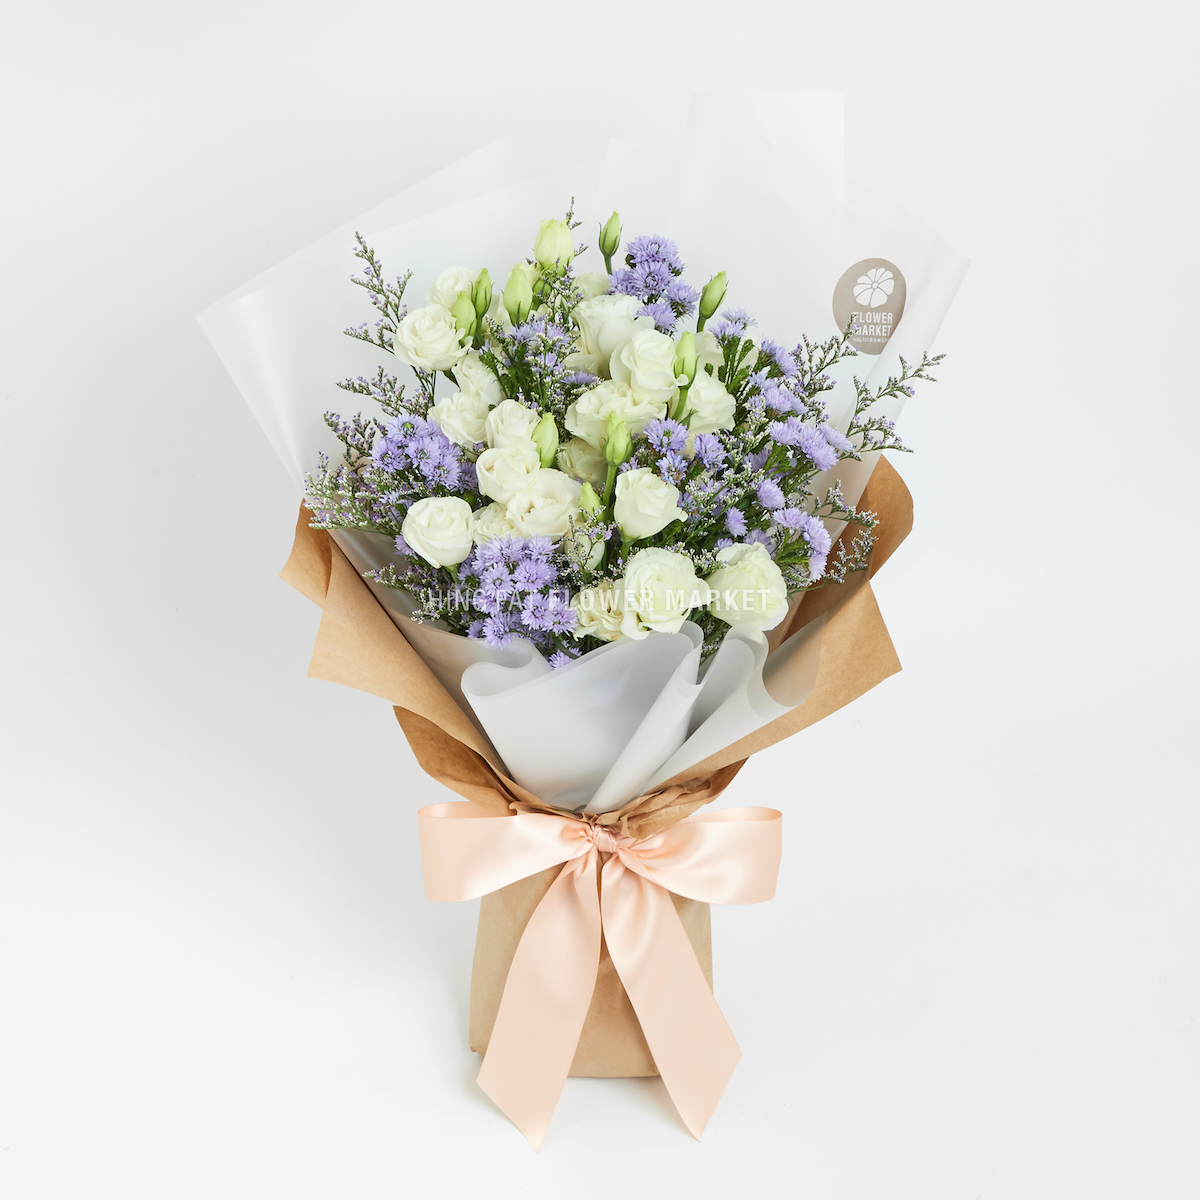 白桔梗情人草花束 White eustoma and caspia bouquet